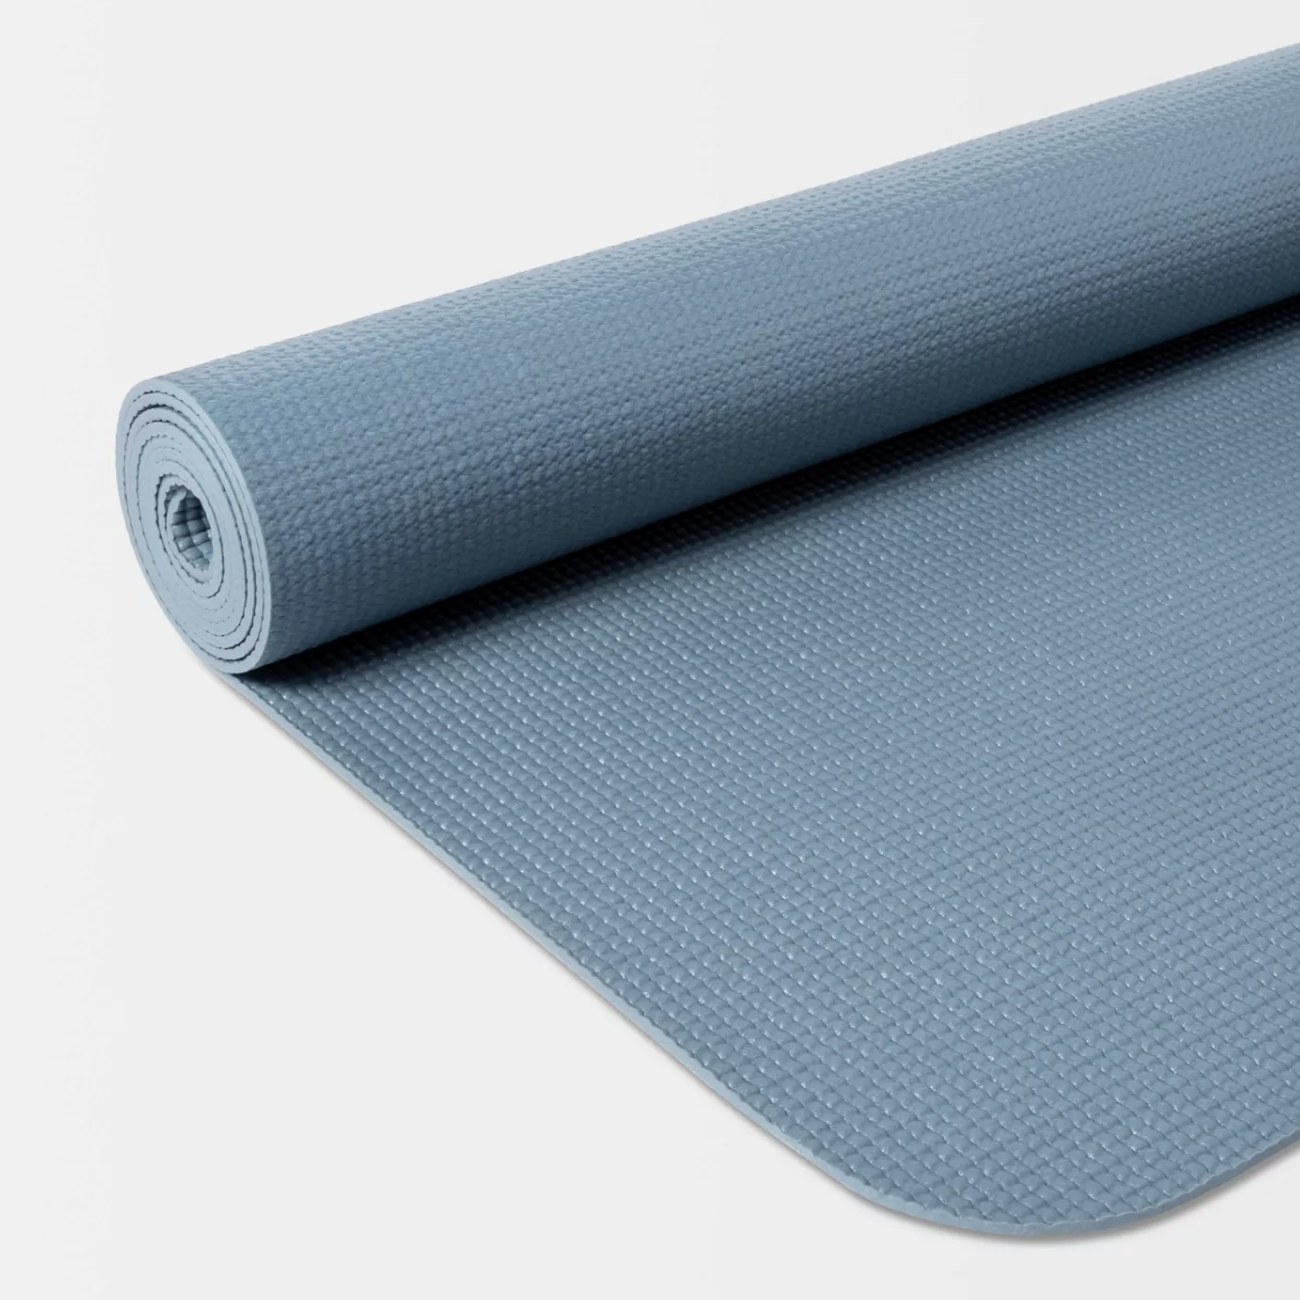 The yoga mat